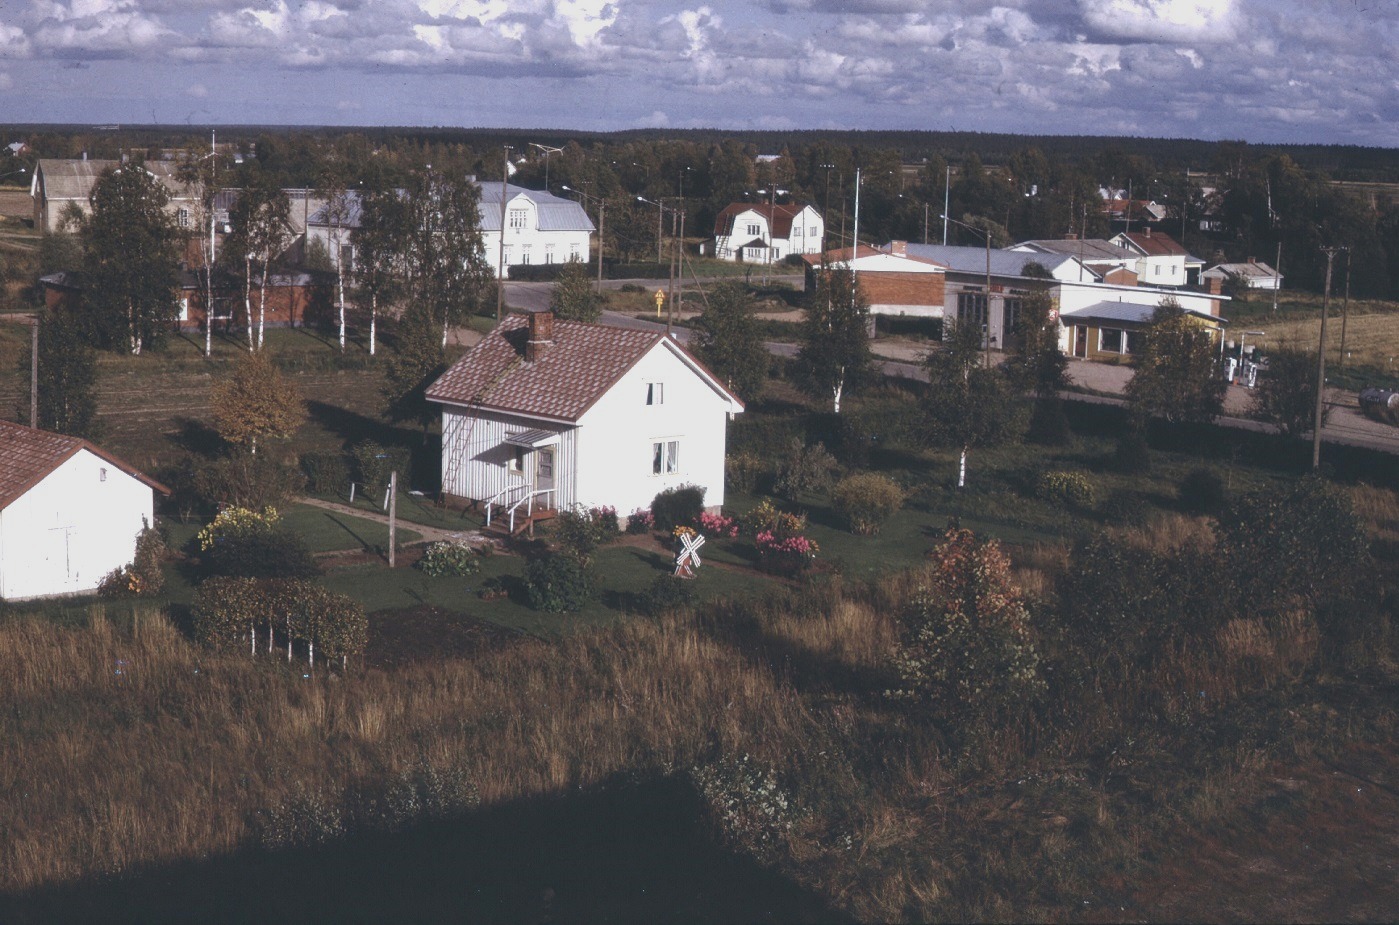 Dagsmark Centrum fotograferat 1974 då ett egnahemshus byggts ovanpå grunden till det nedbrunna sparbankshuset.